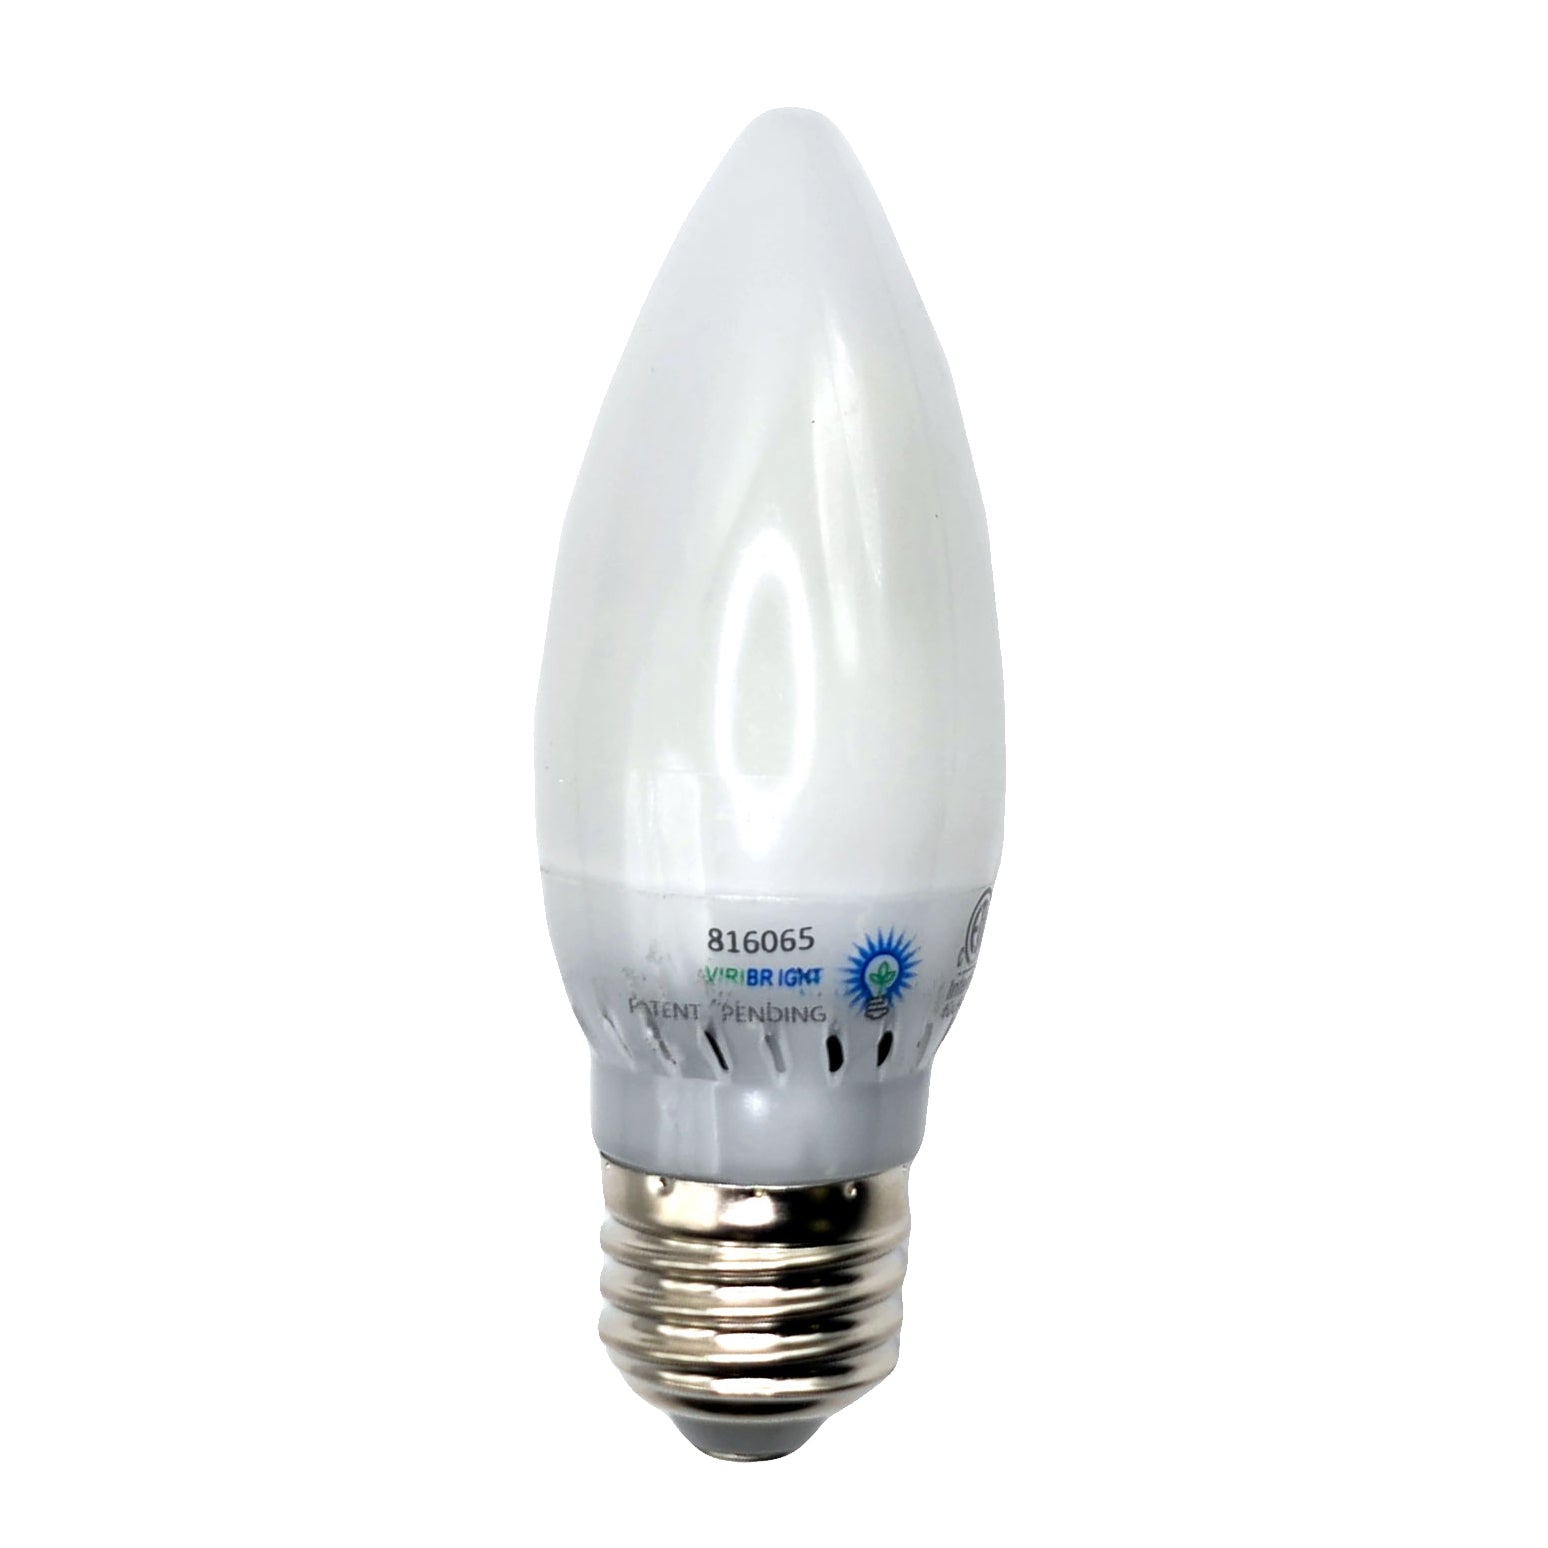 Ungdom ketcher Smigre 40-Watt Equivalent B11 E26 Frosted LED Light Bulb